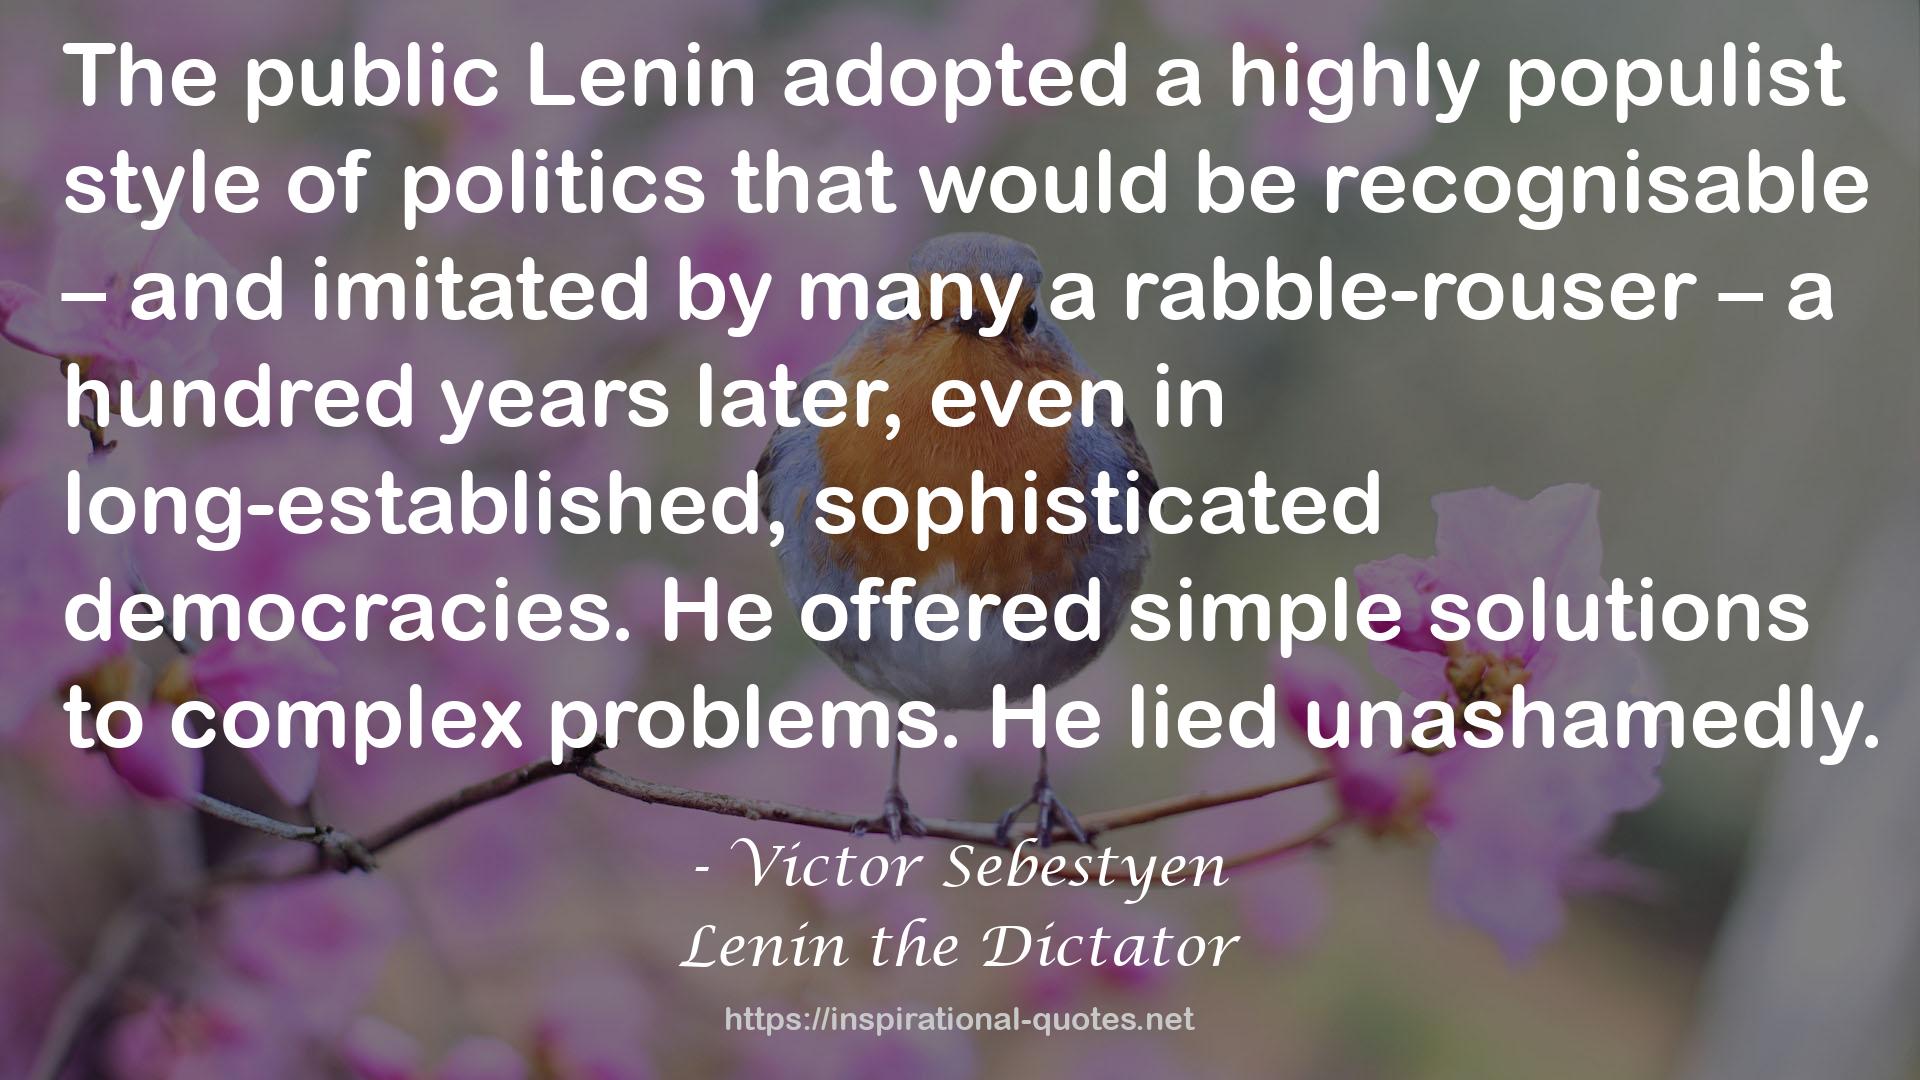 Lenin the Dictator QUOTES